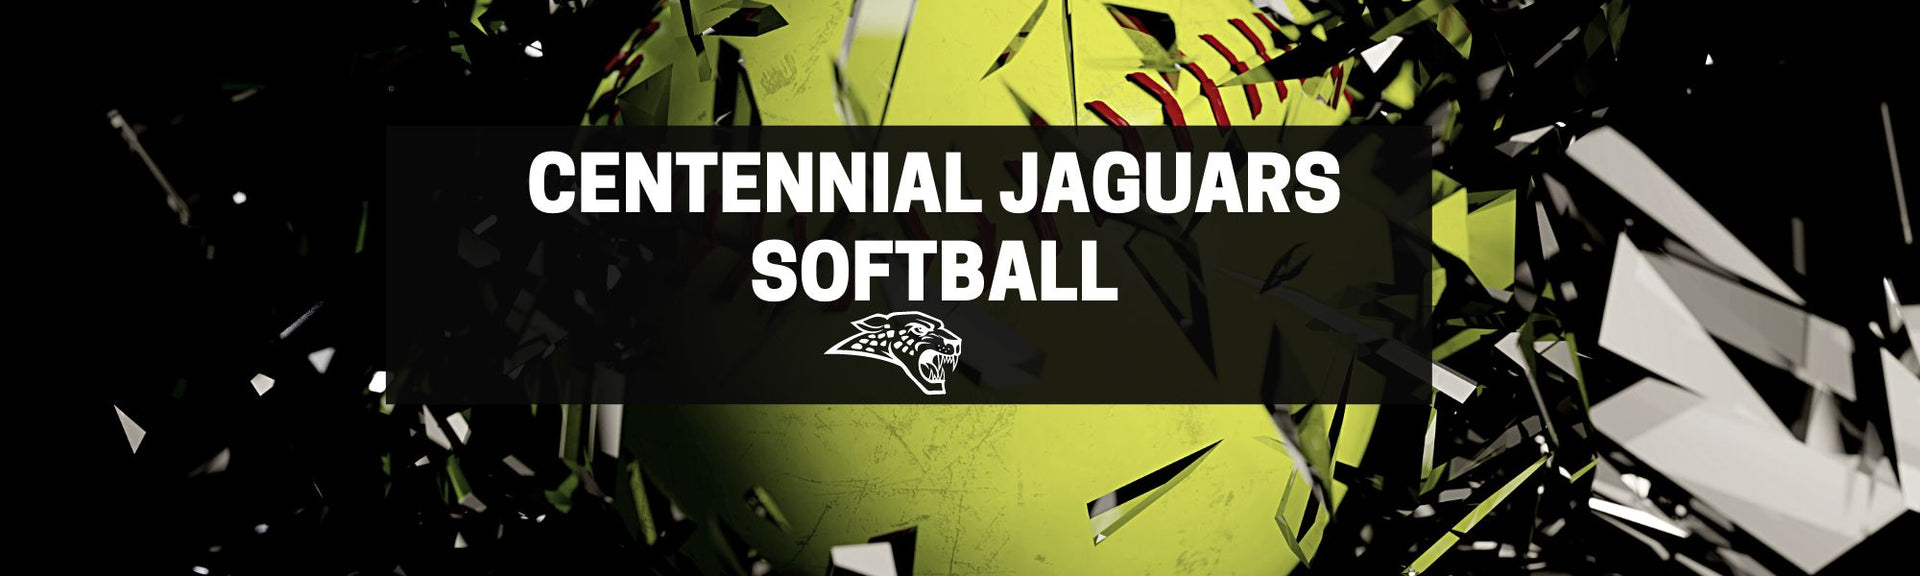 Centennial Jaguars Softball Collection